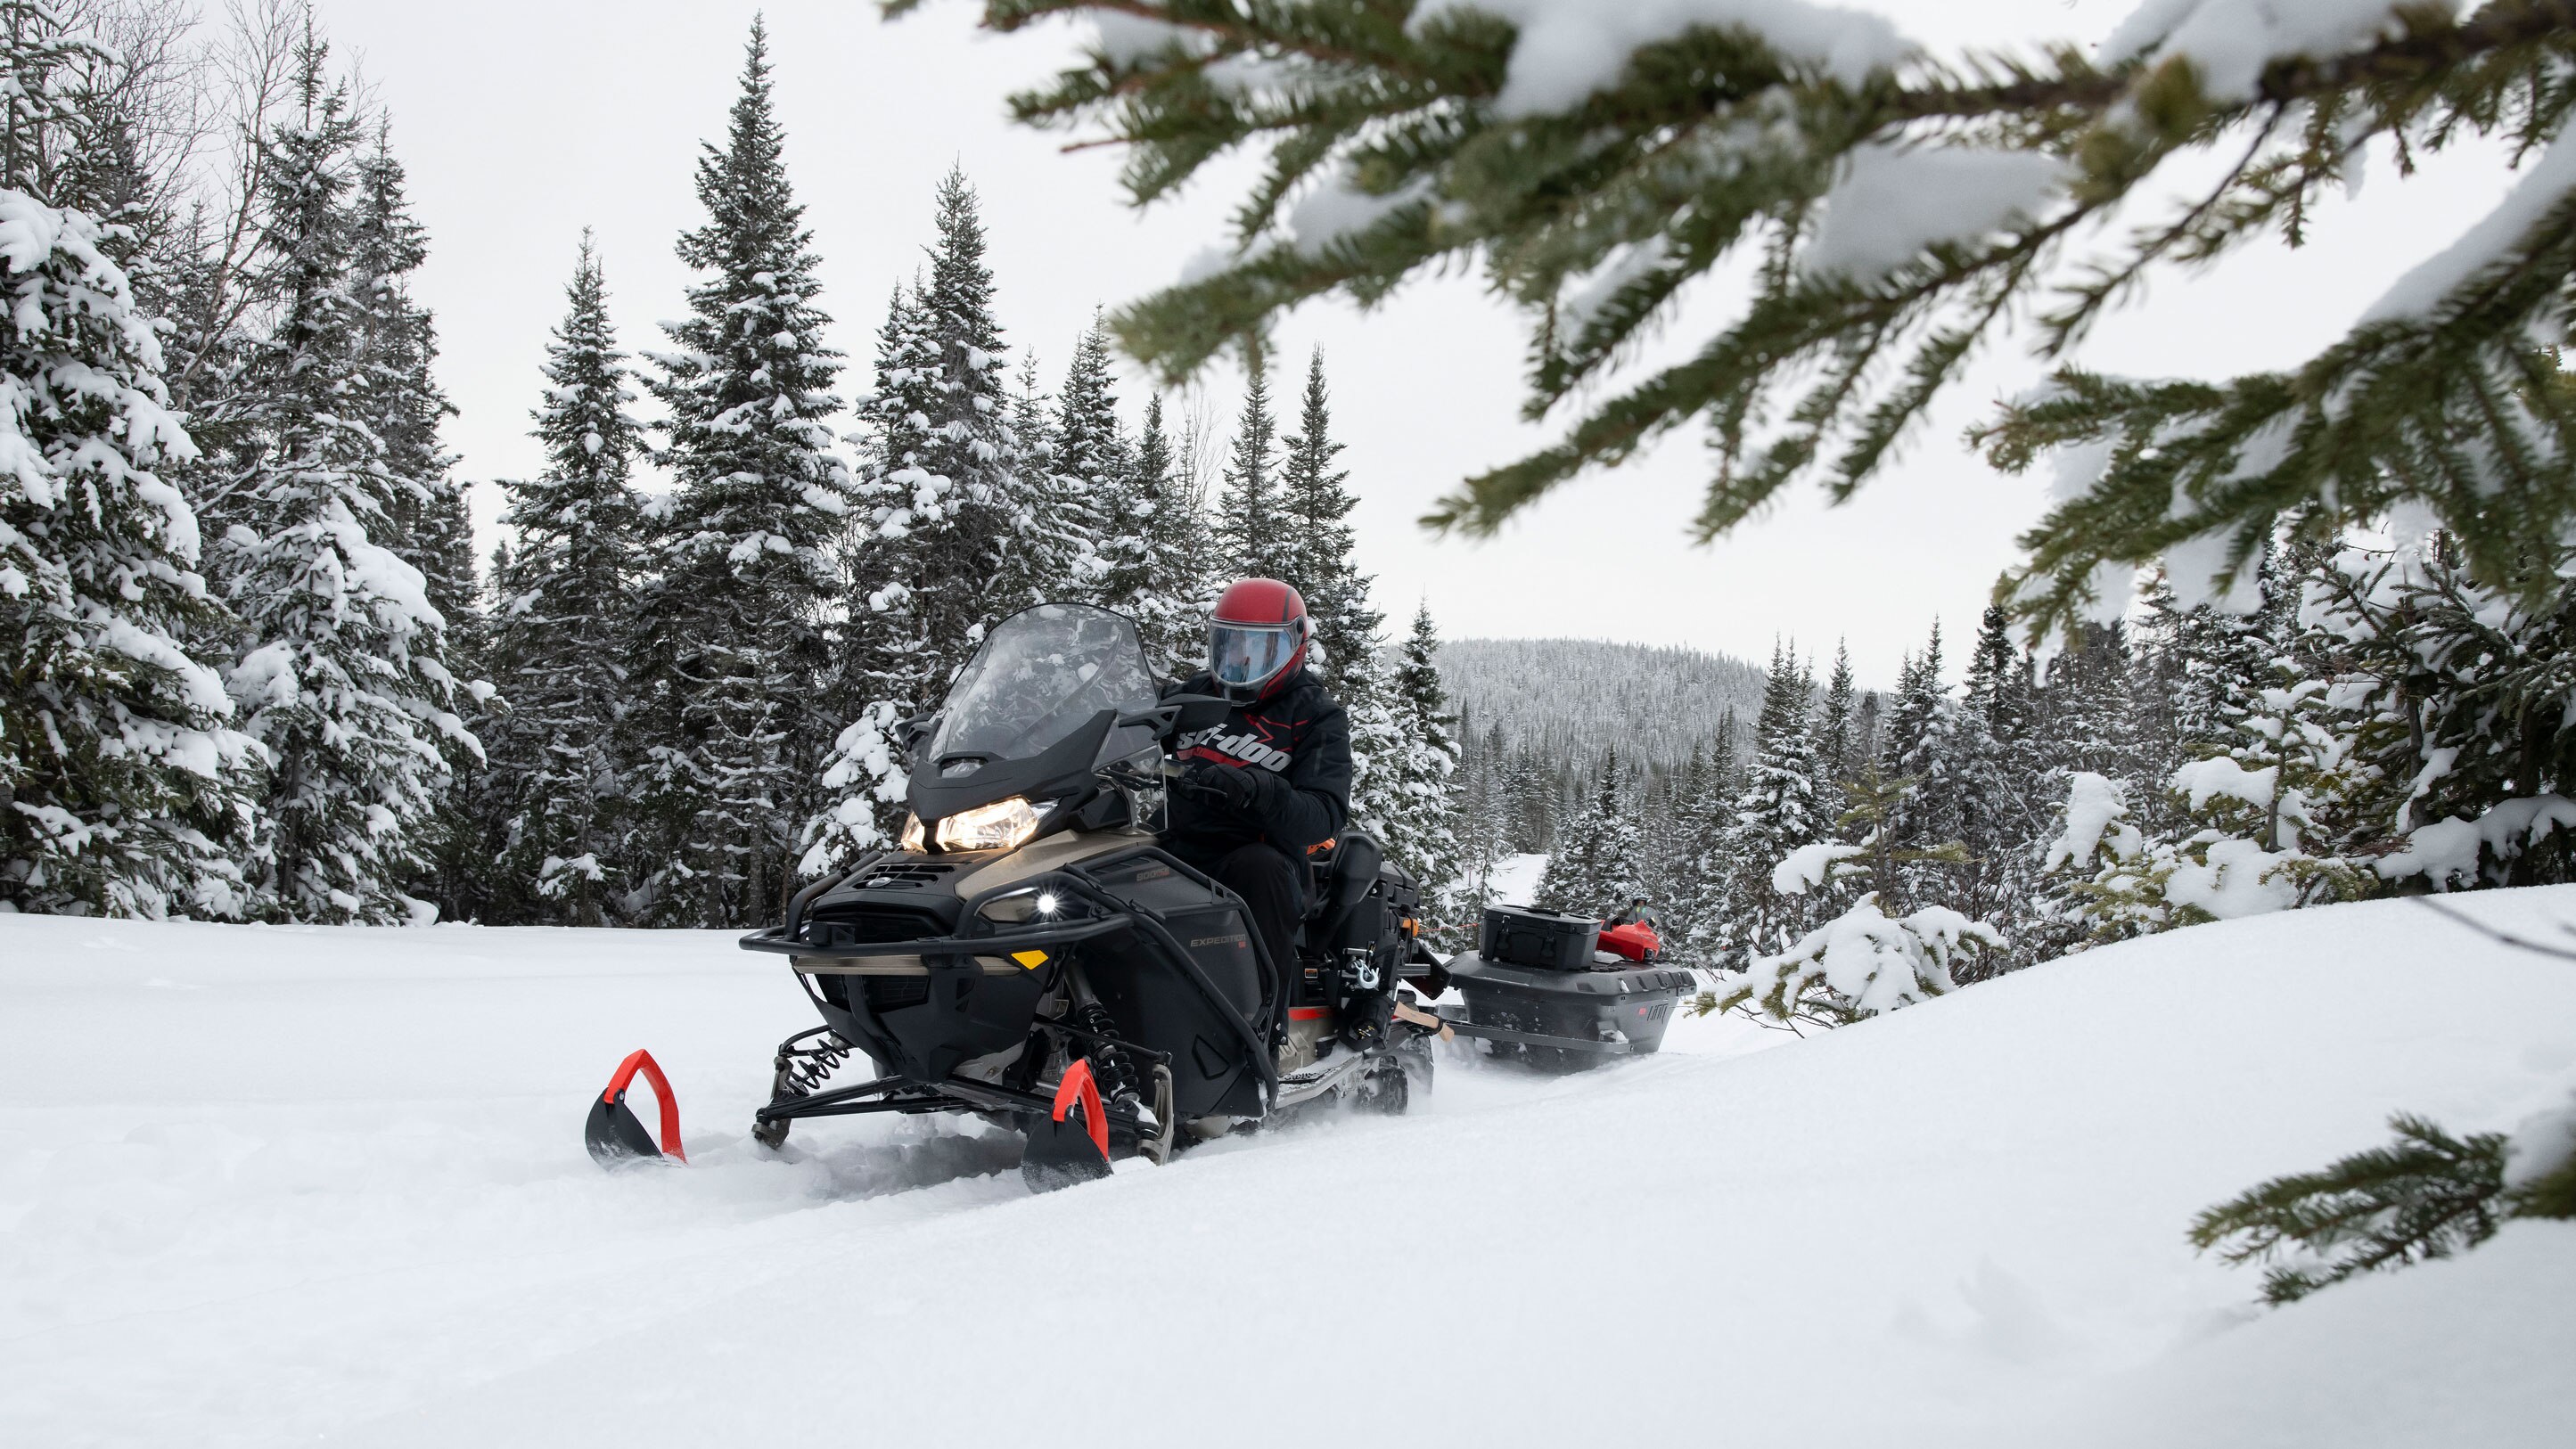  2022 Ski-Doo Expedition towing a sleigh